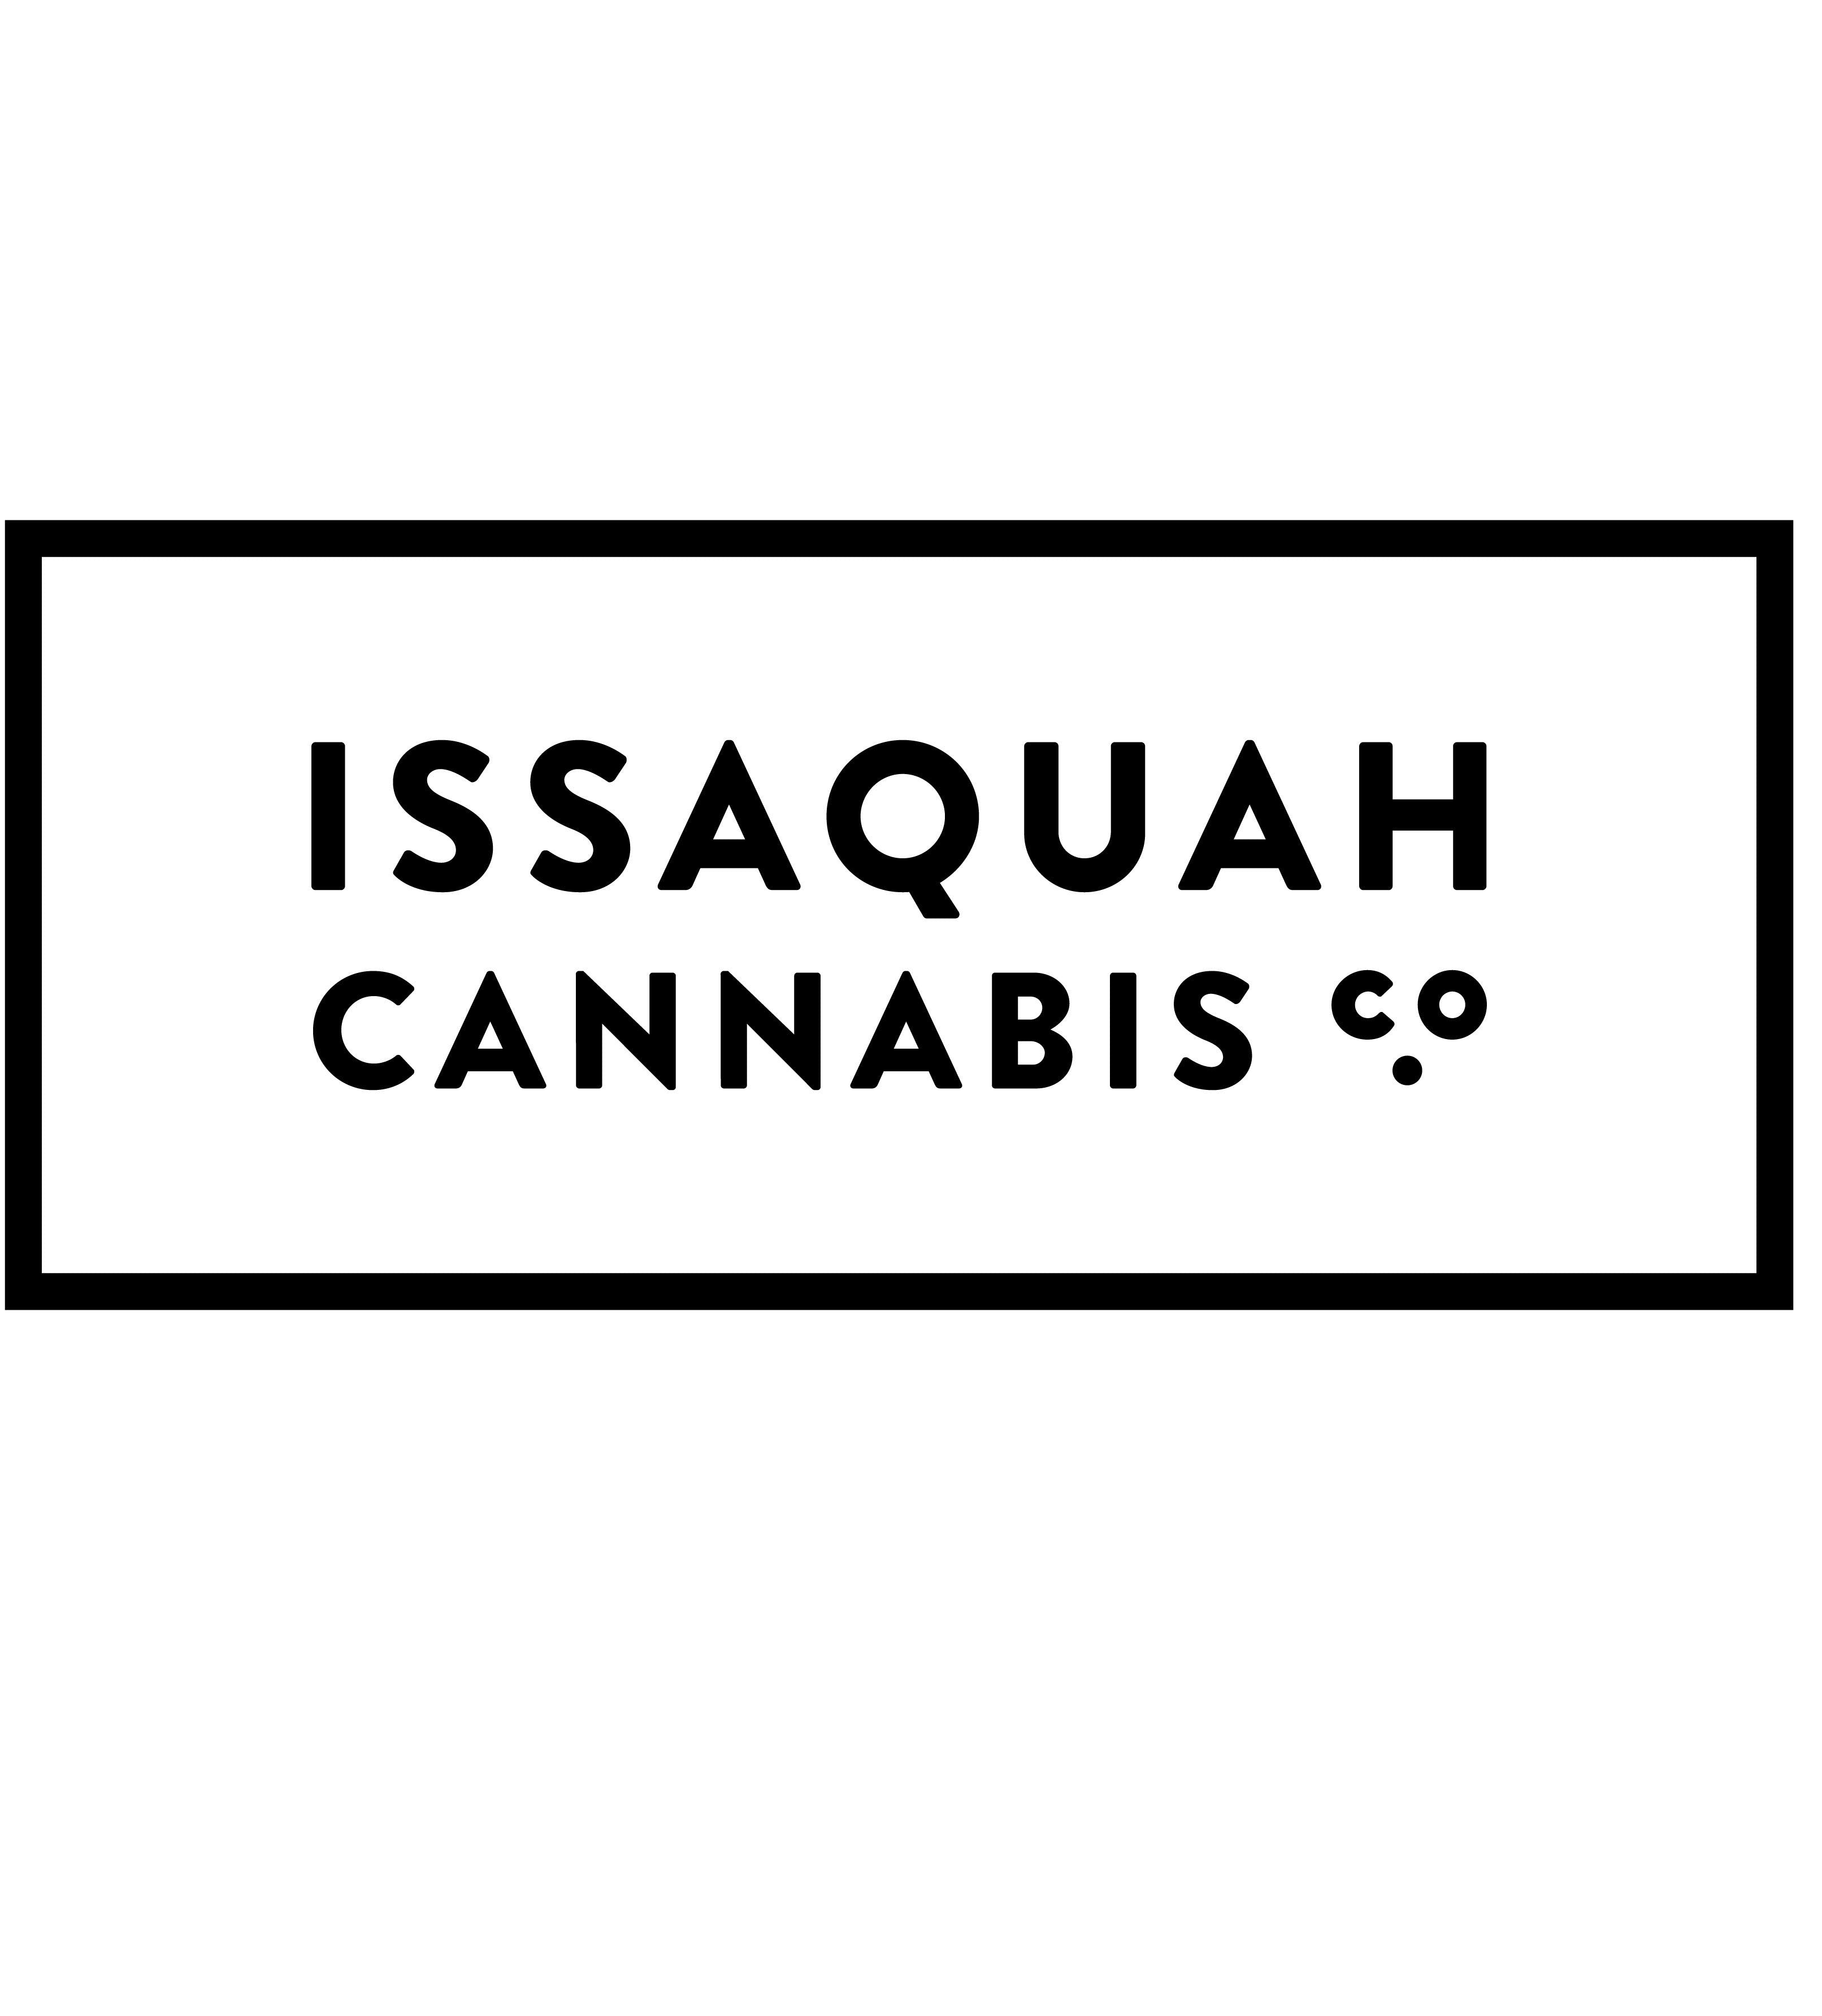 Issaquah Cannabis Company - Medical Marijuana Doctors - Cannabizme.com